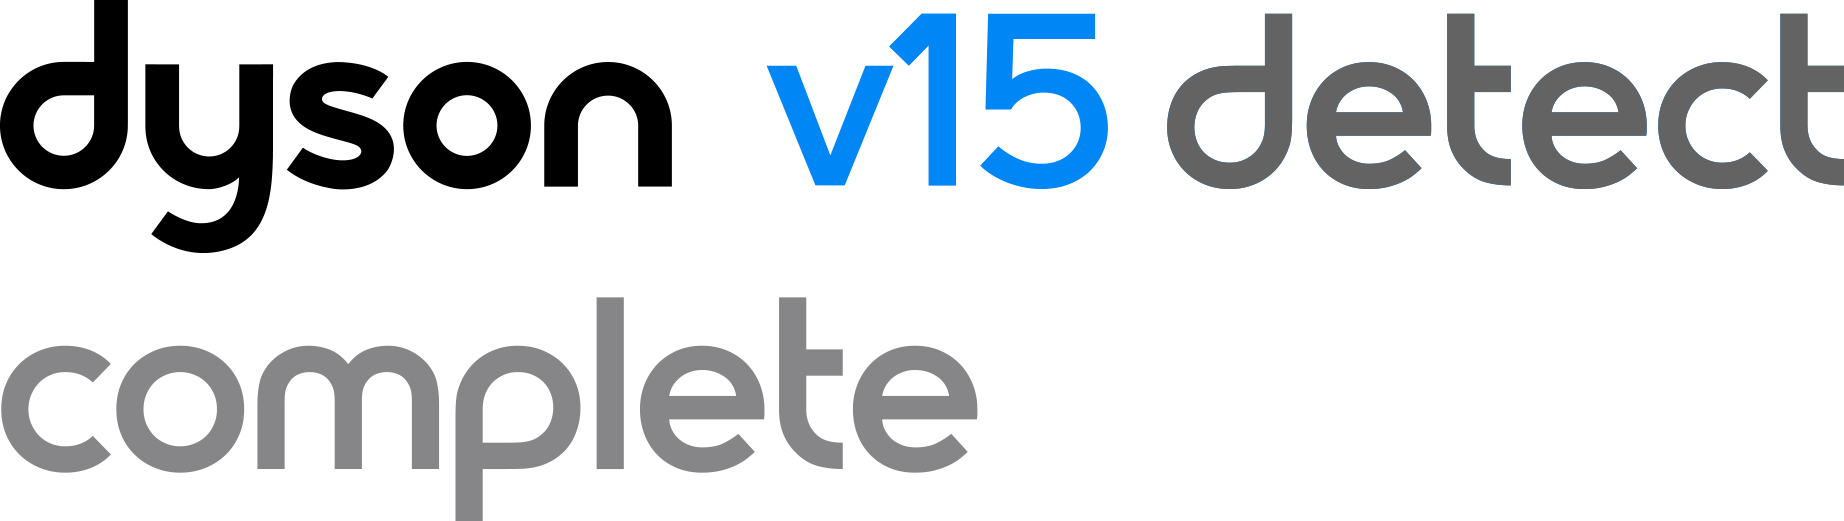 Dyson V15 Detect Complete logo (Edition 2022)